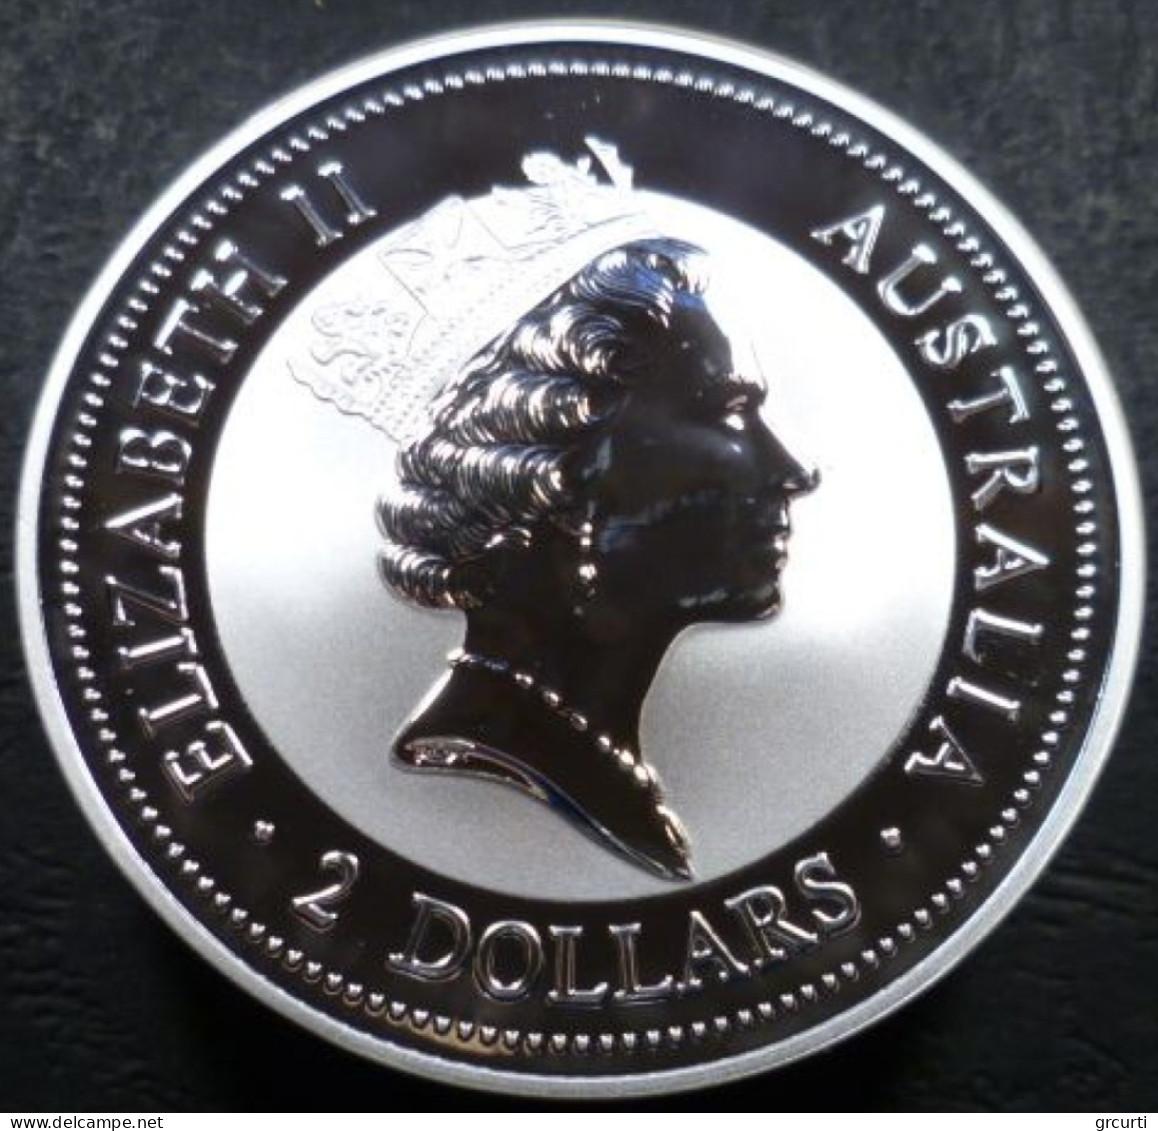 Australia - 2 Dollari 1998 - Kookaburra - KM# 563 - Silver Bullions